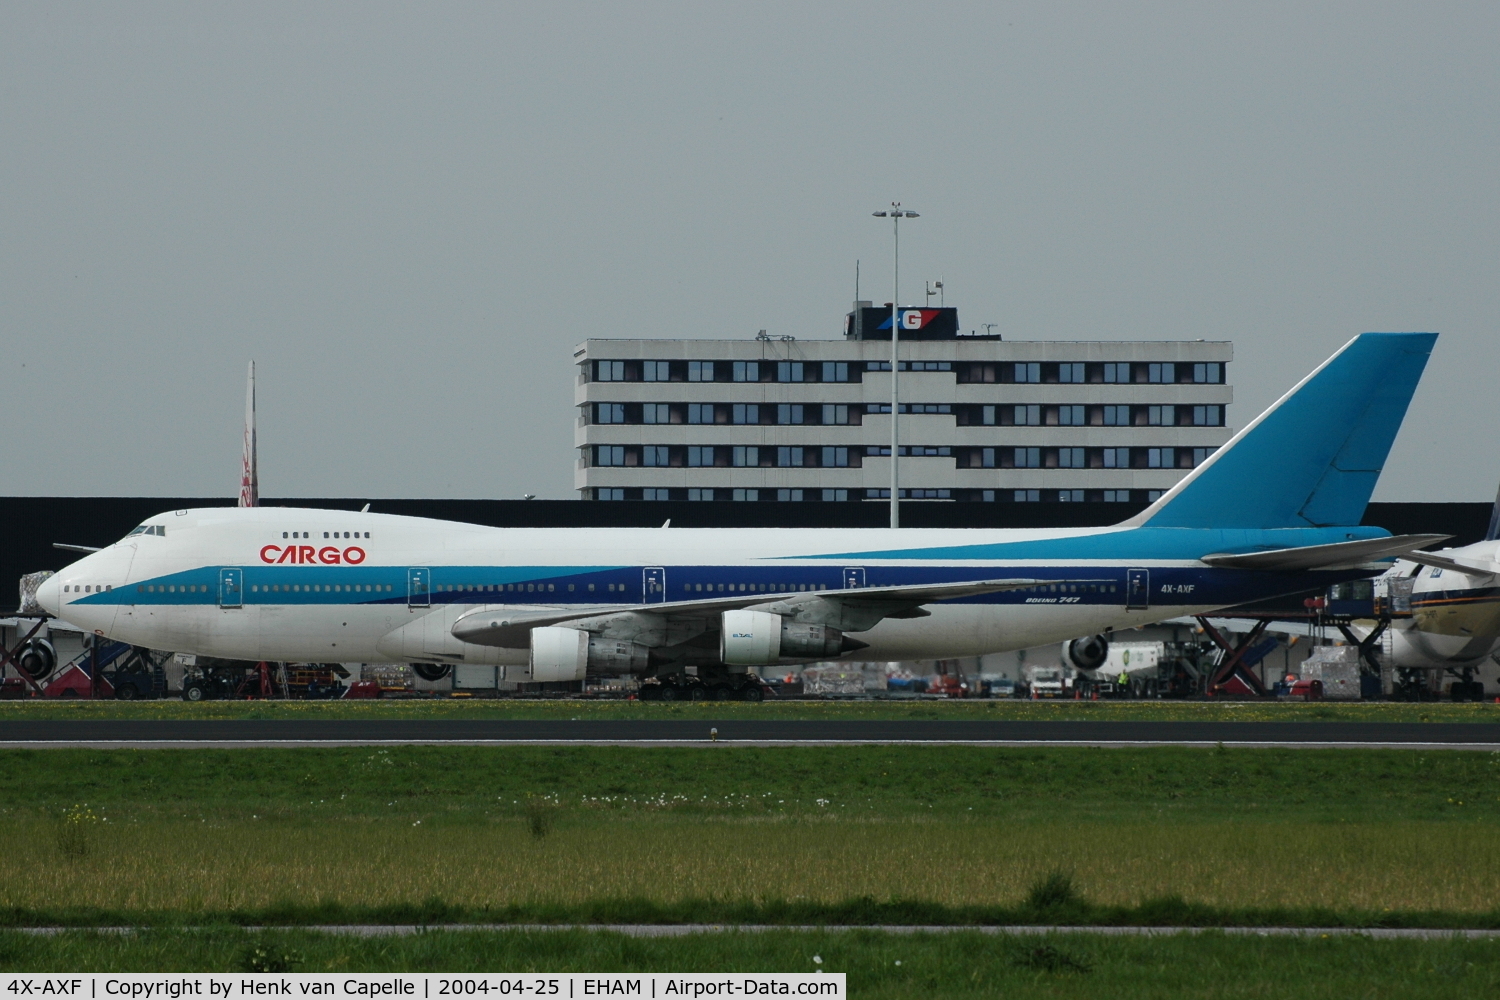 4X-AXF, 1978 Boeing 747-258C C/N 21594, El Al cargo 747-200 at Schiphol airport.